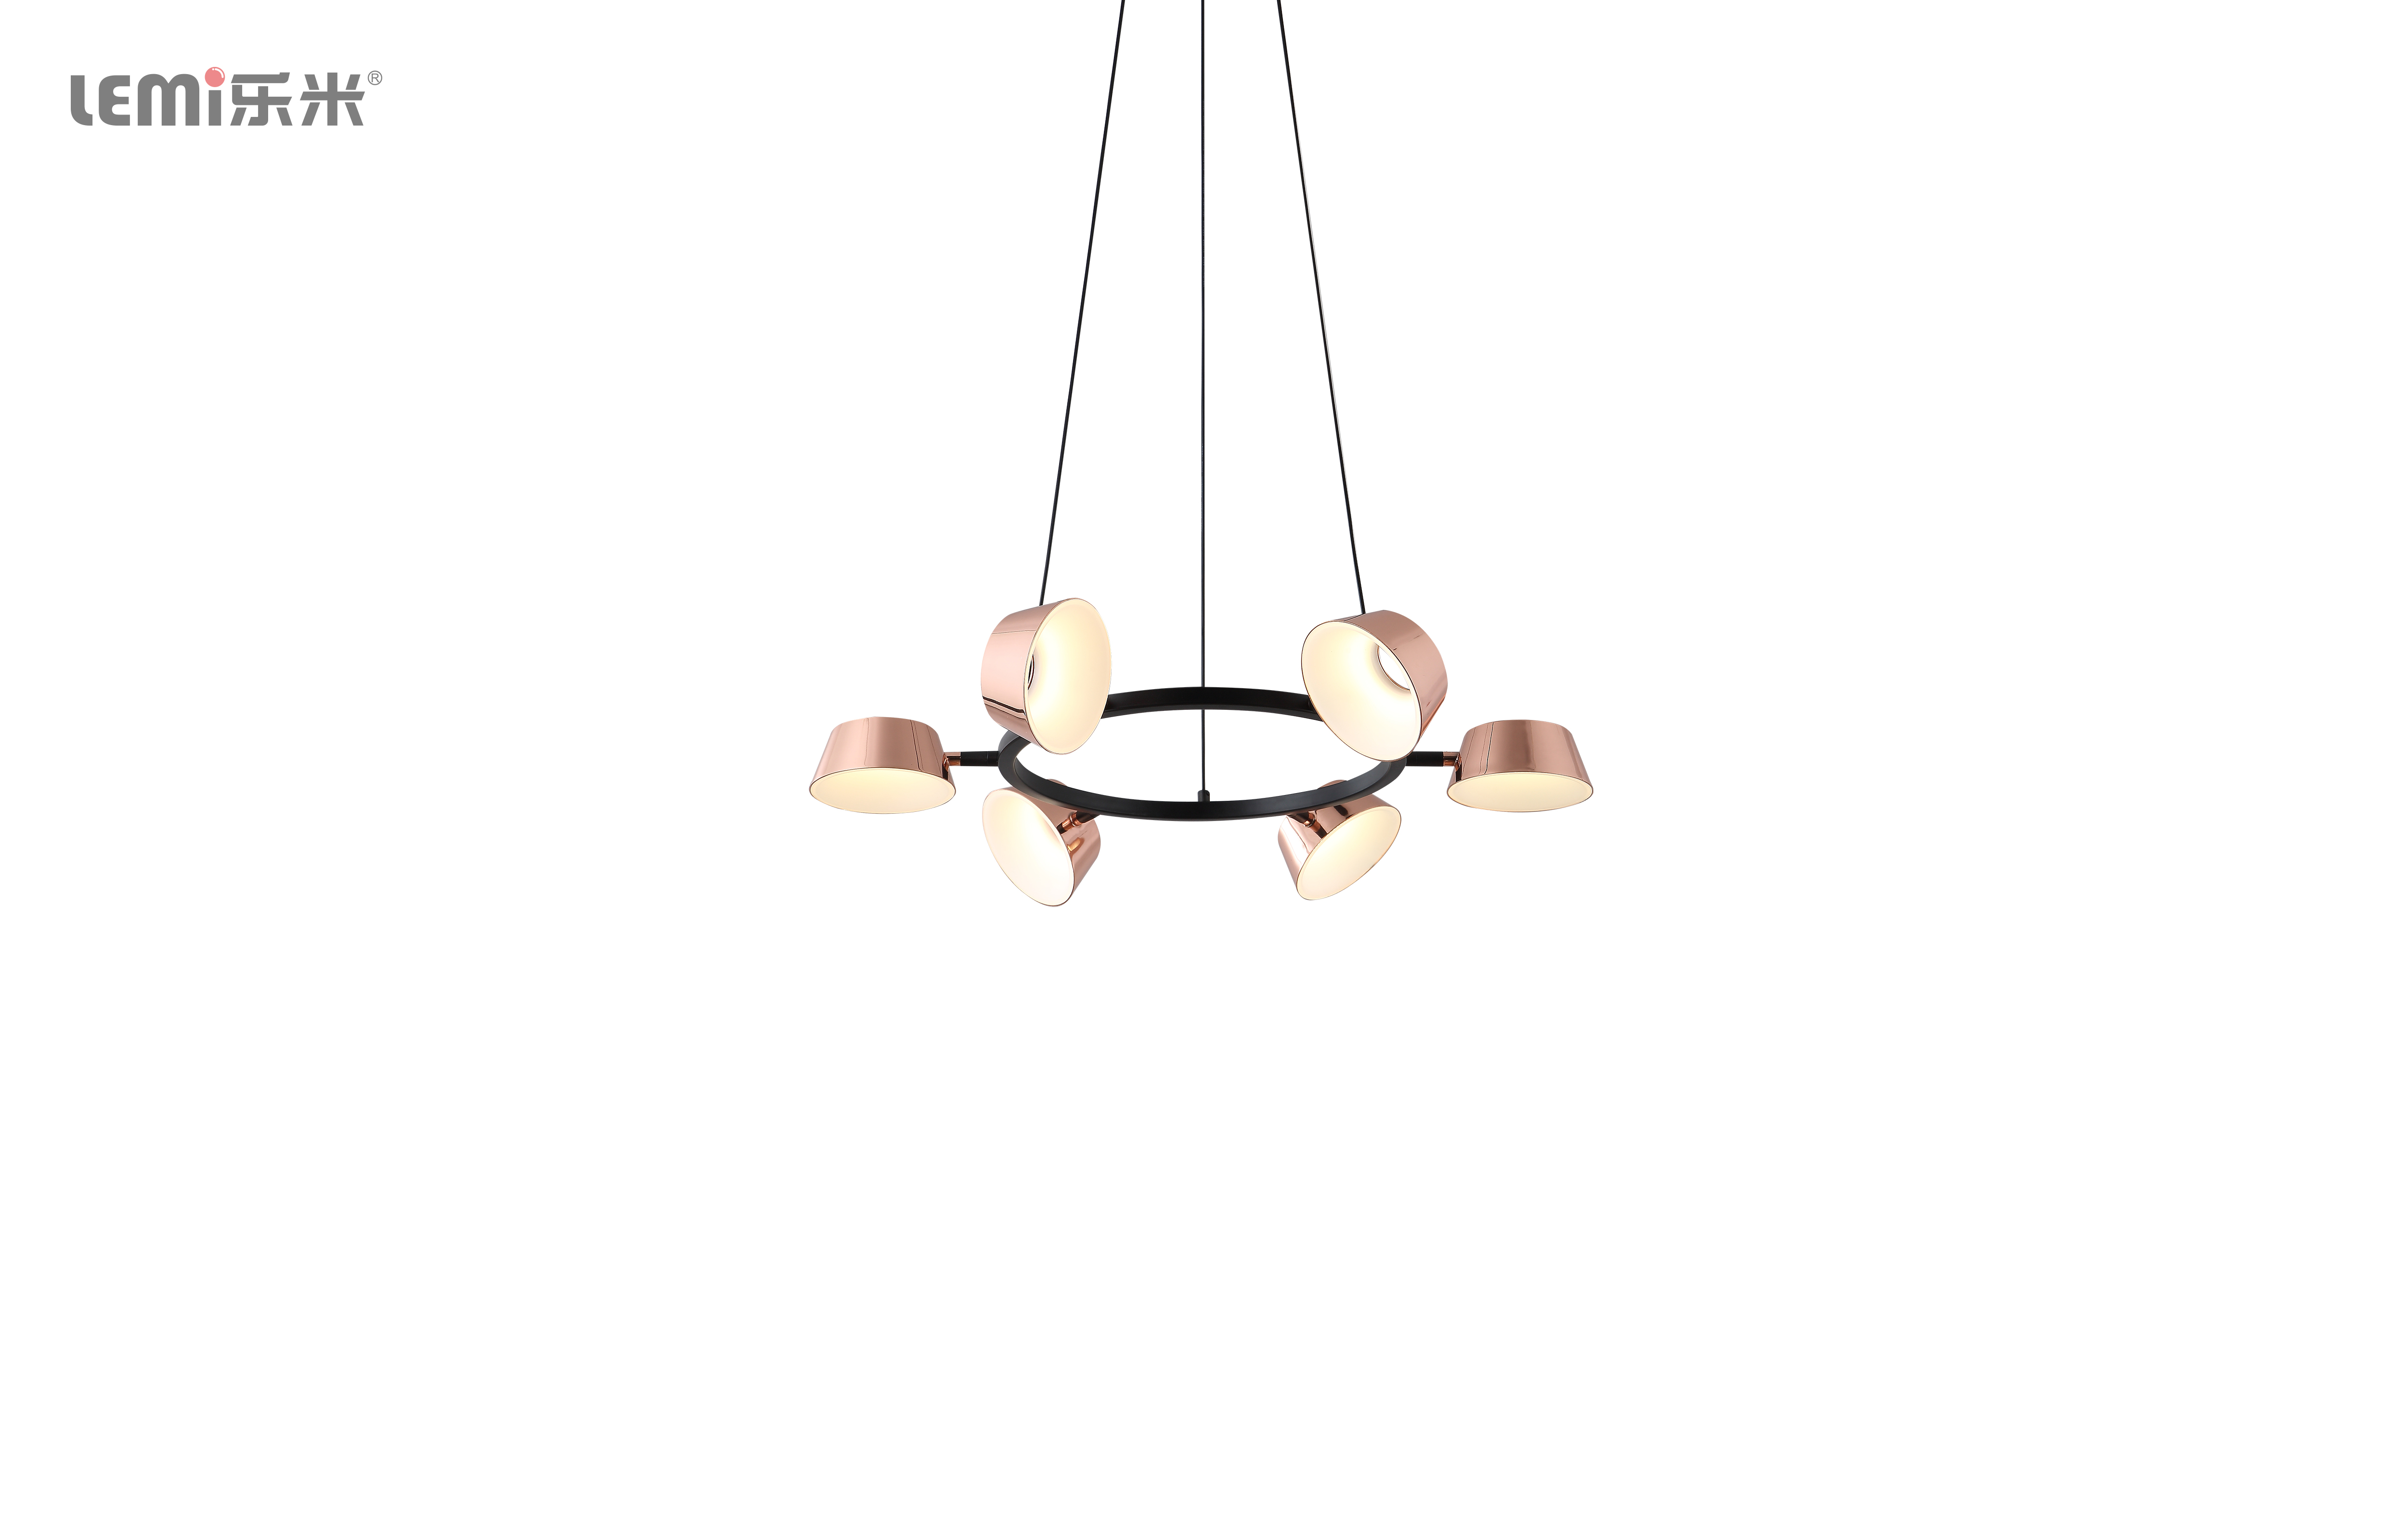 Lemi dream chandelier series